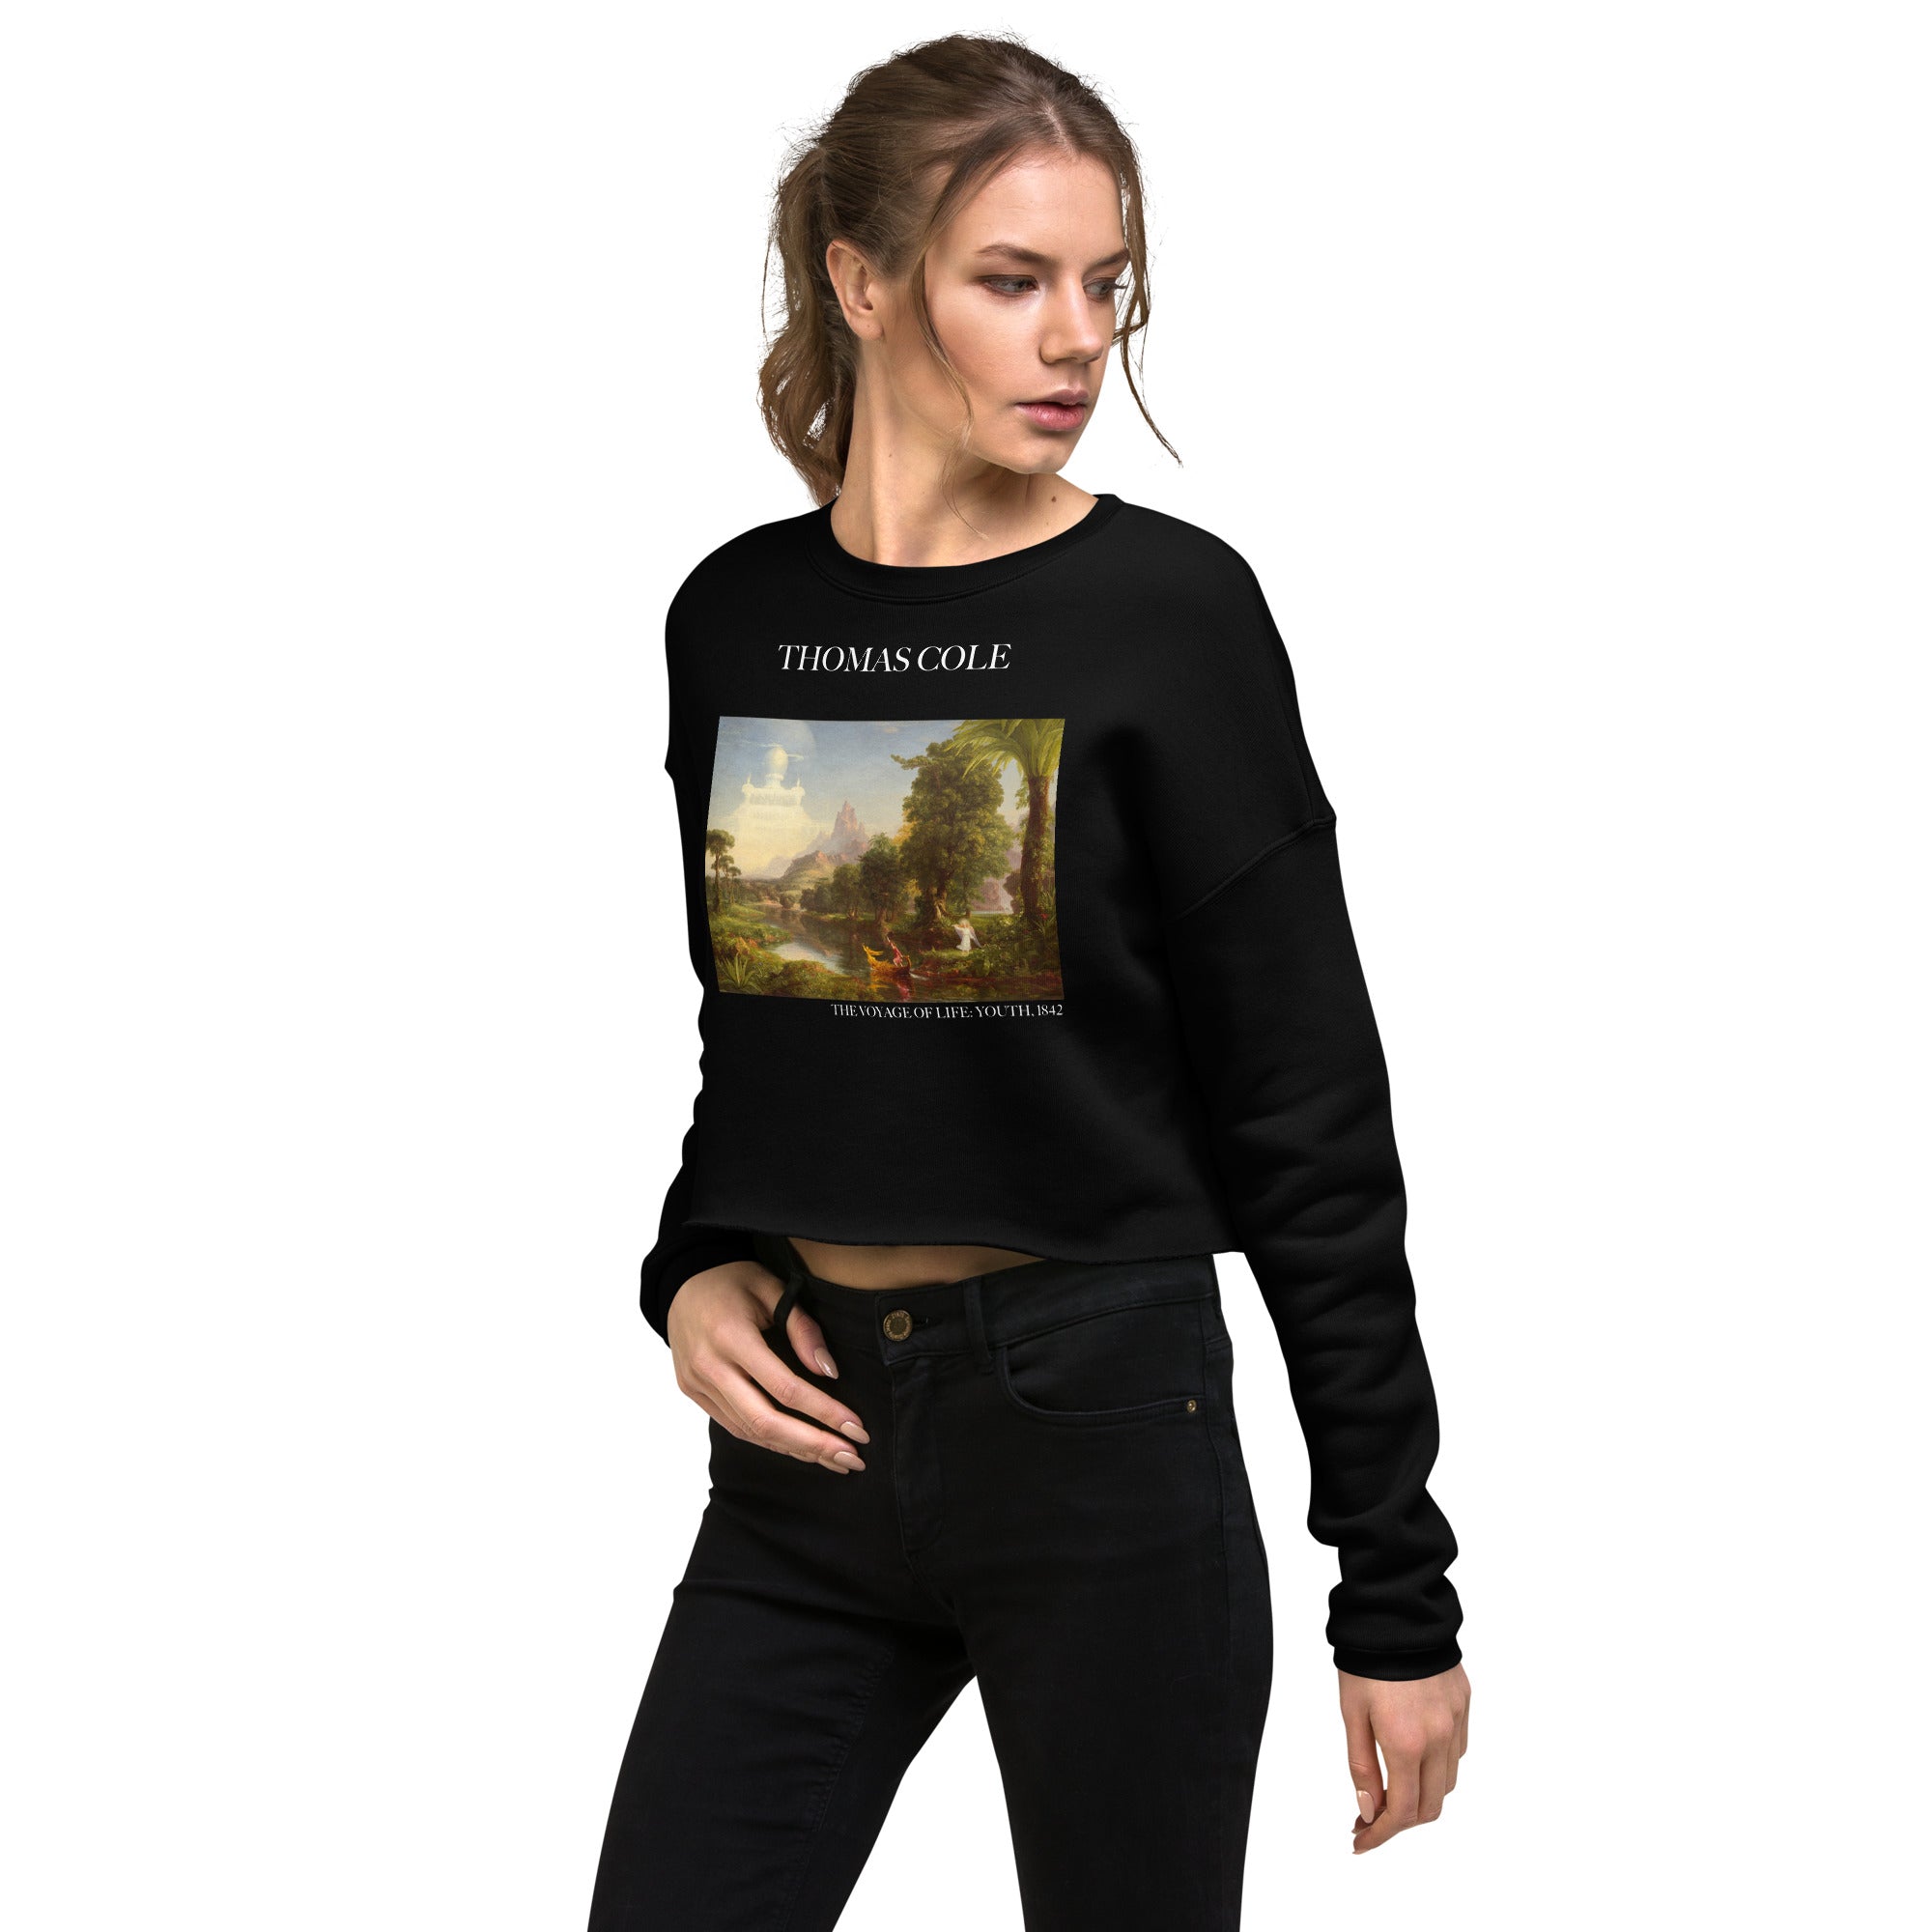 Thomas Cole 'The Voyage of Life: Youth' Famous Painting Cropped Sweatshirt | Premium Art Cropped Sweatshirt